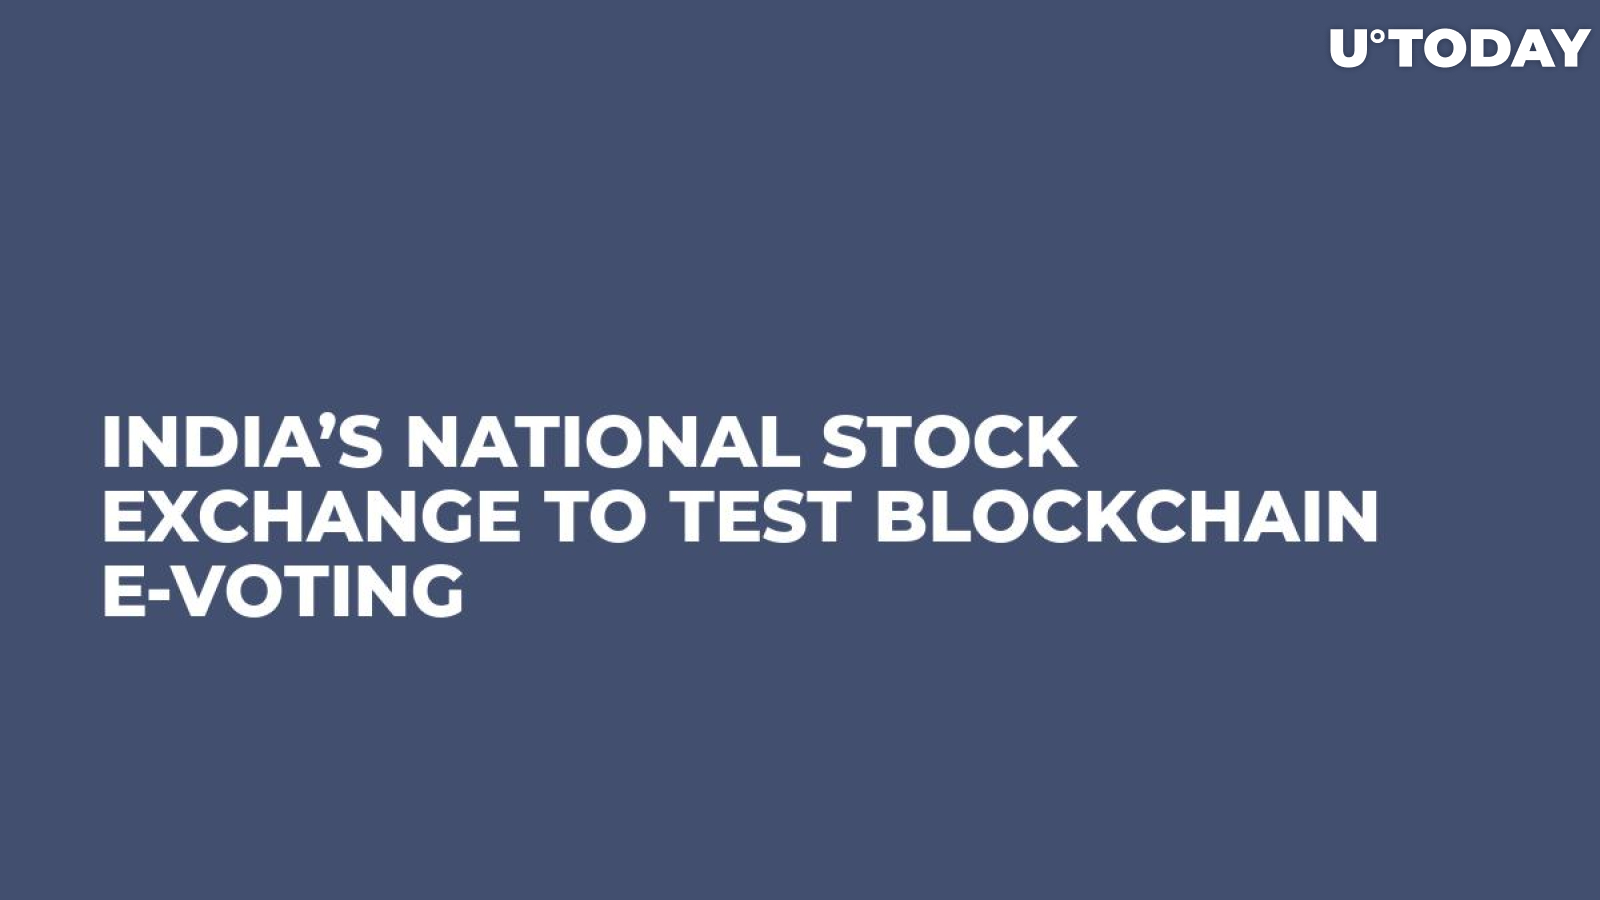 India’s National Stock Exchange to Test Blockchain e-Voting